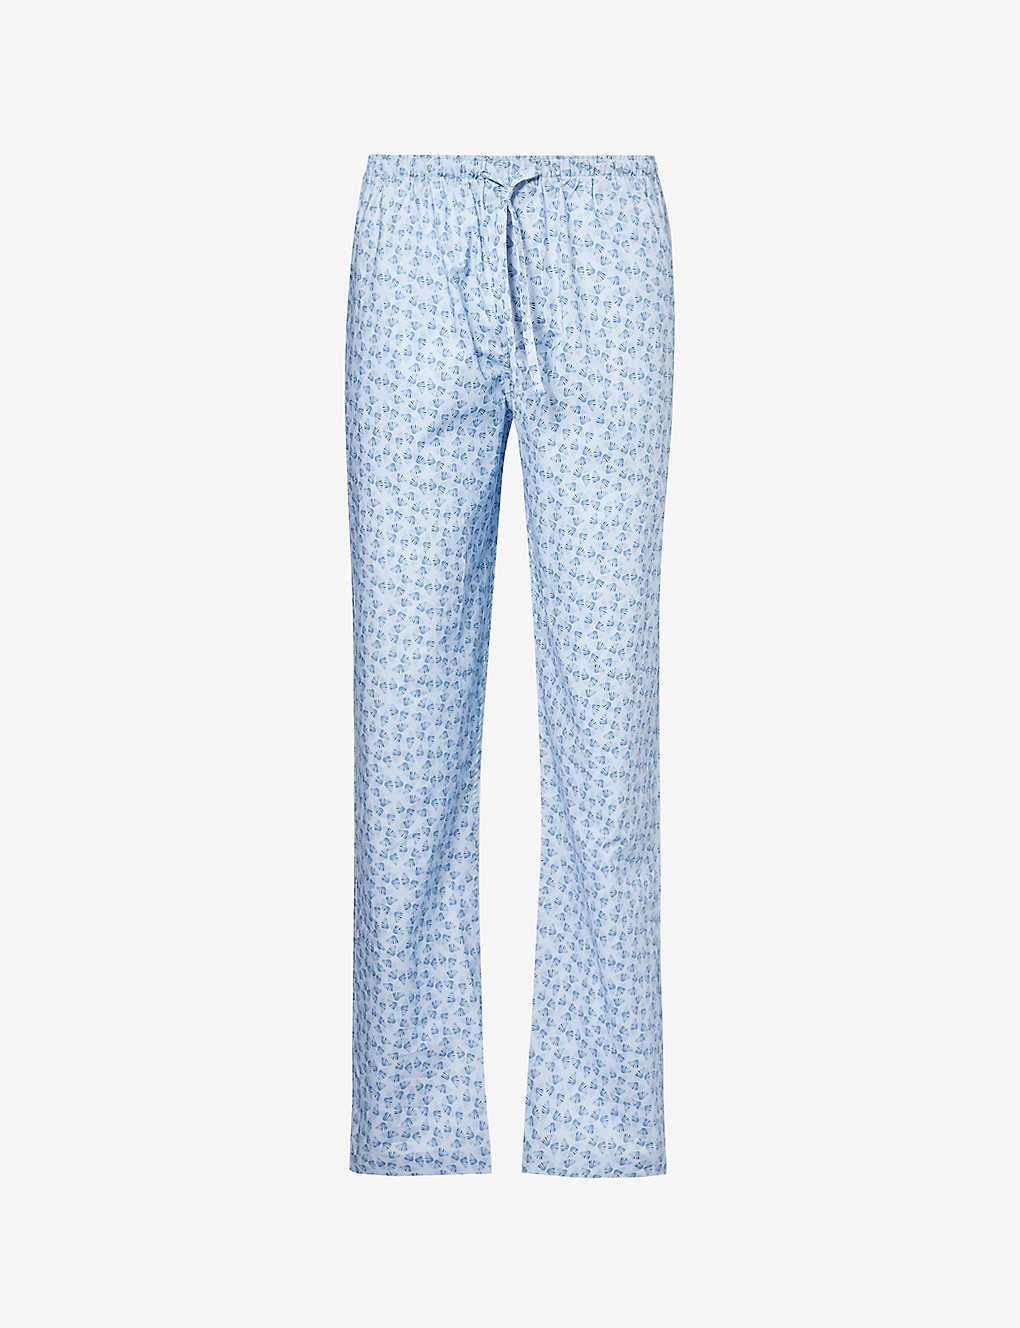 Zimmerli Mens Light Blue 505 Slip-pocket Patterned Cotton Pyjama Bottoms